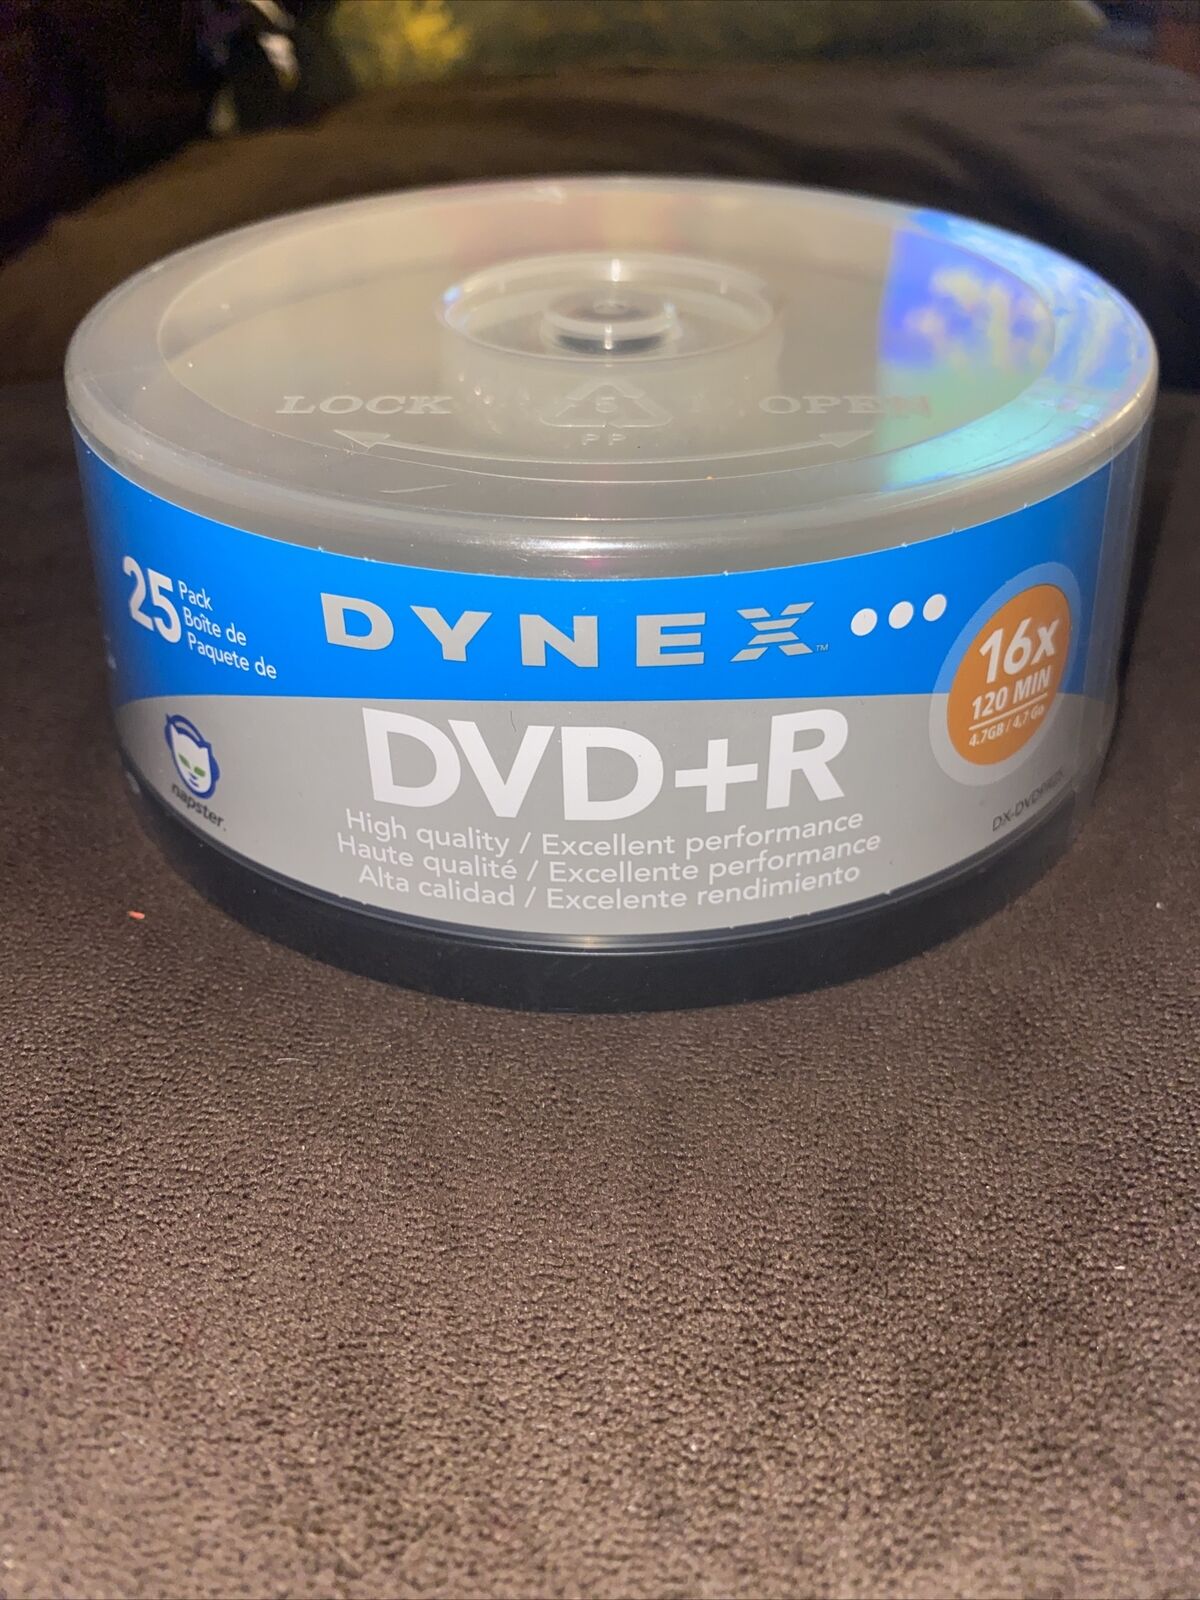 Dynex 25-Pack - 16x DVD+R Disc Spindle - Blue/Gray (DX-DVDPR25)